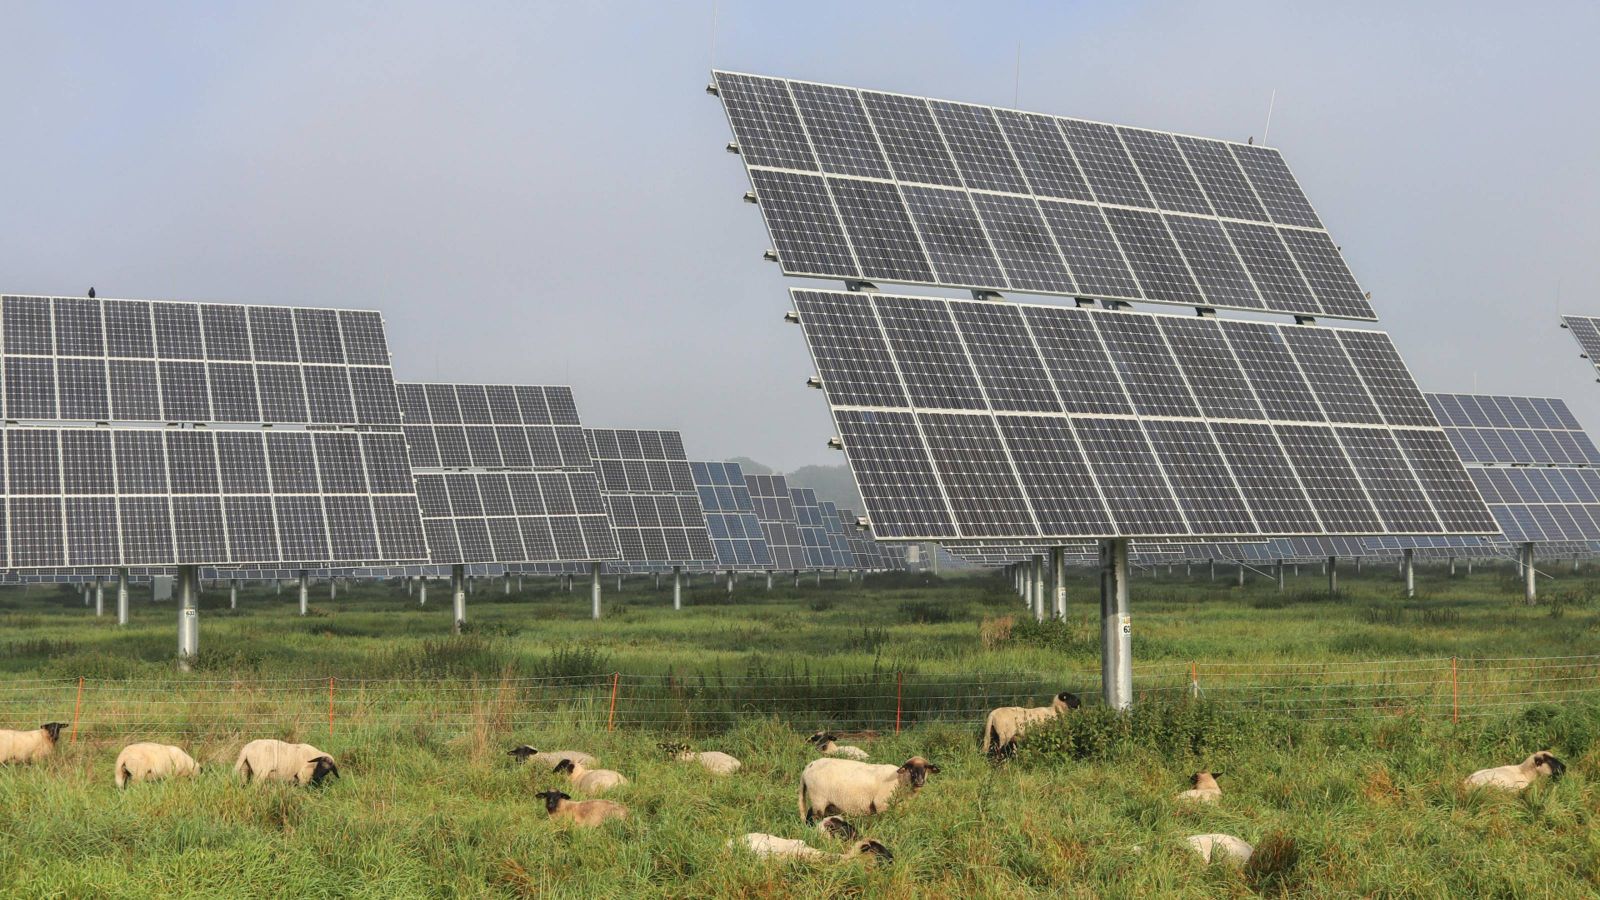 Sheep grazing under solar panels 